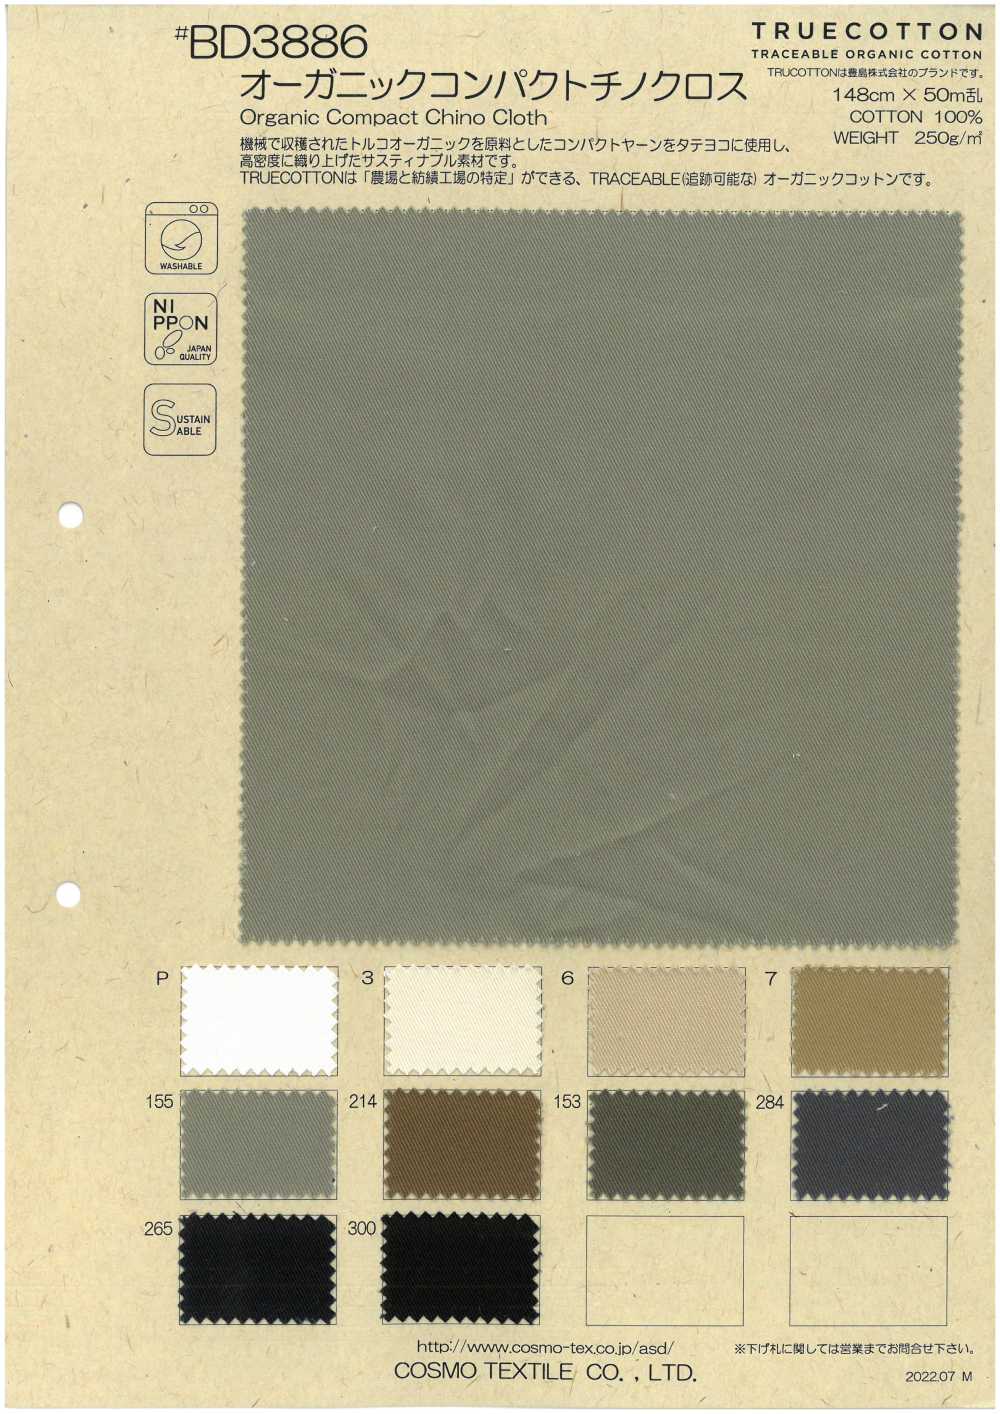 BD3886 Organic Compact Yarn Chino Cloth[Textile / Fabric] COSMO TEXTILE